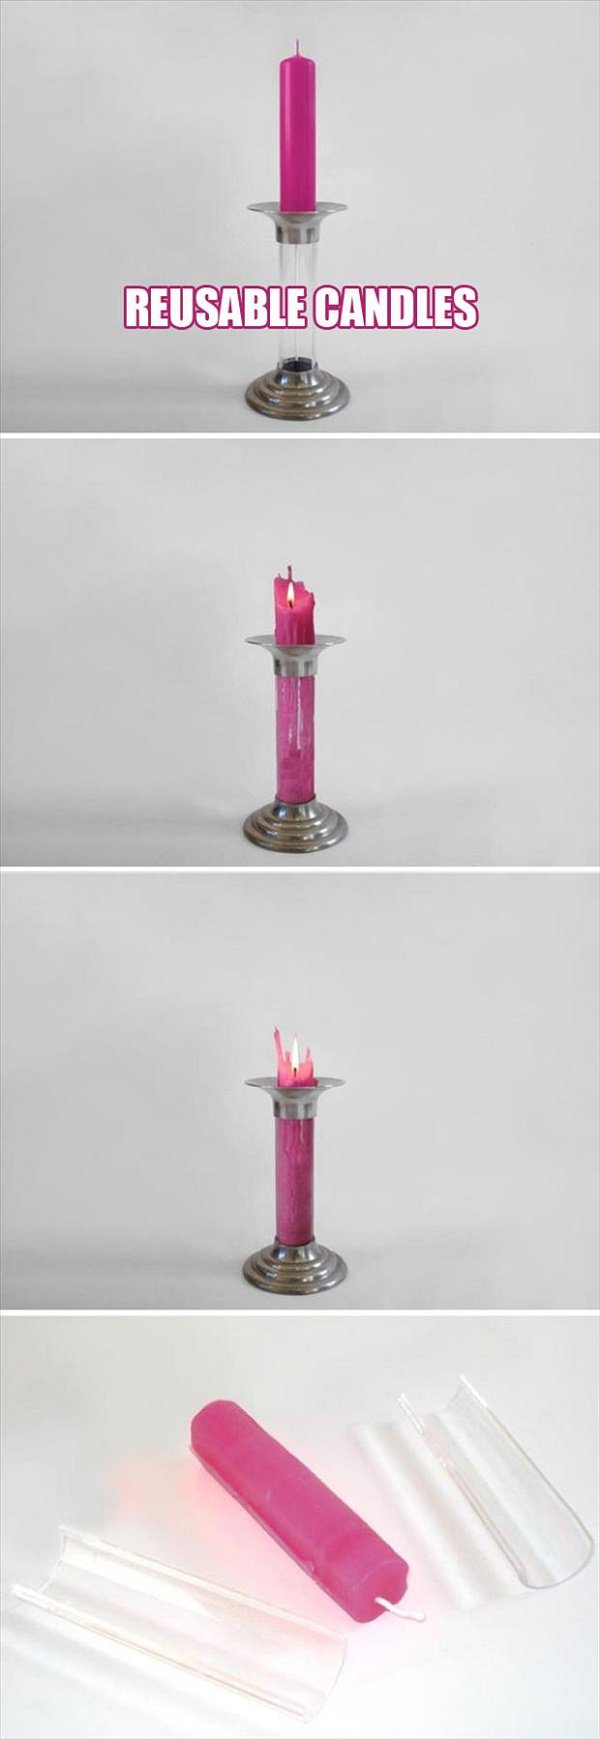 reusable candles